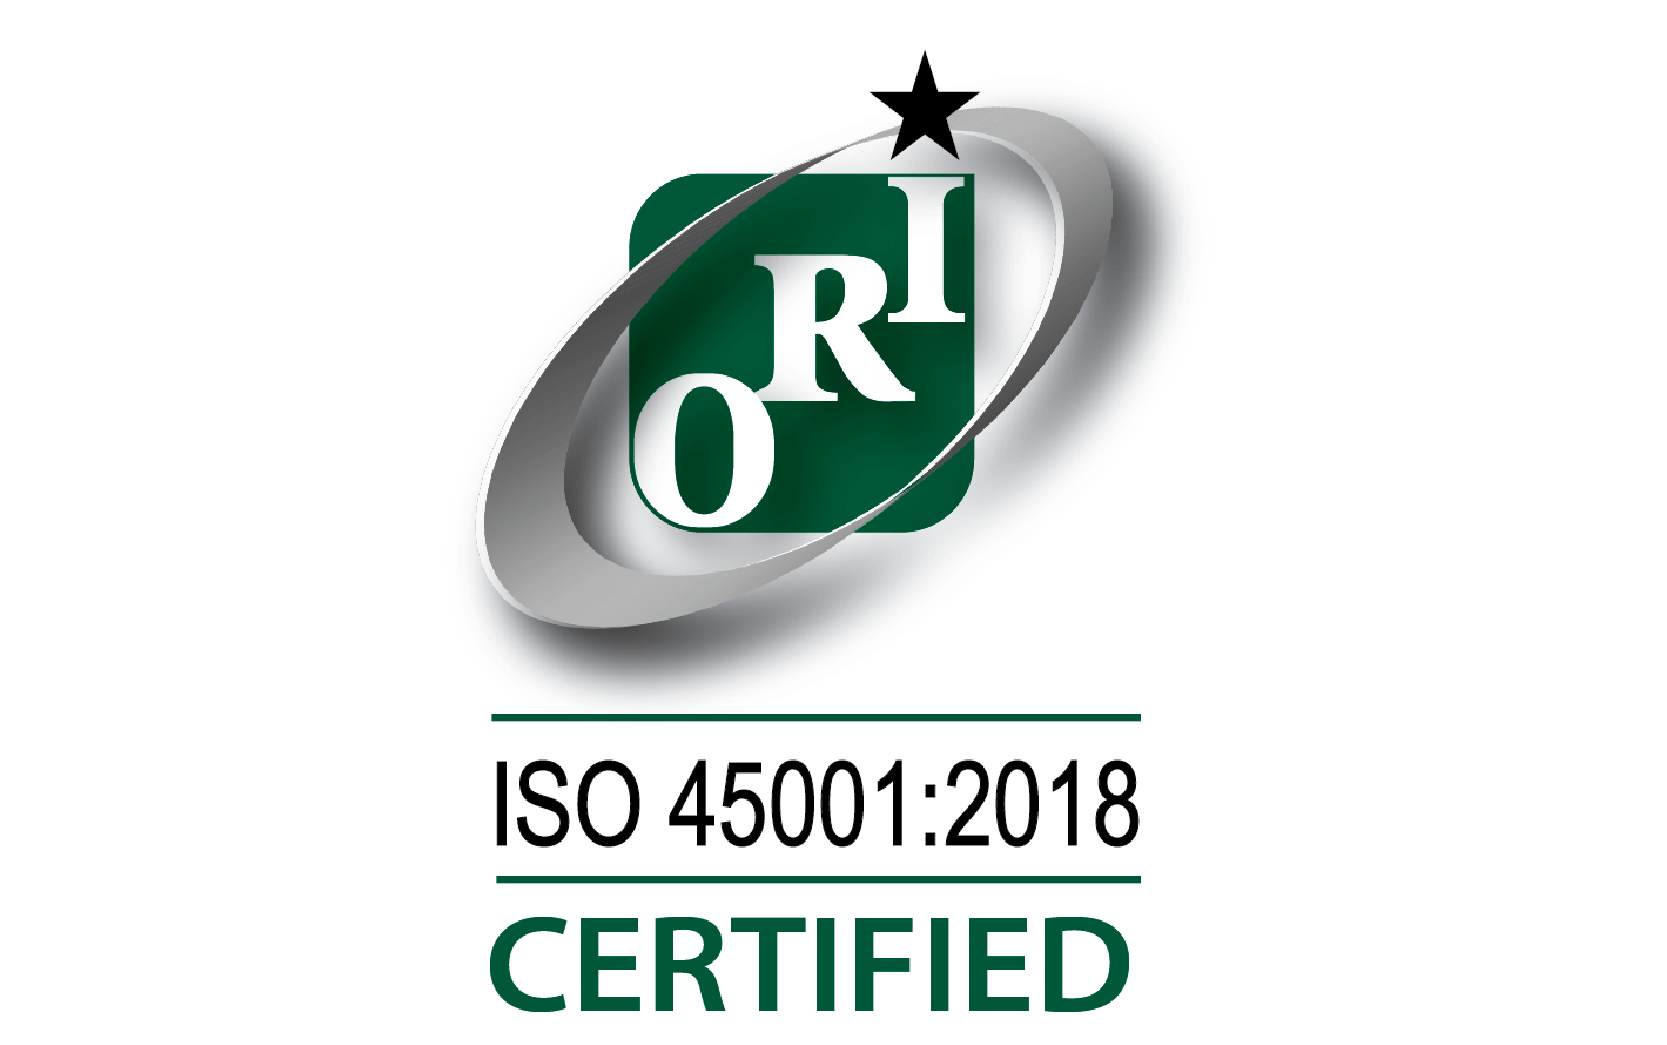 ORI, ISO 45001 - certification logo